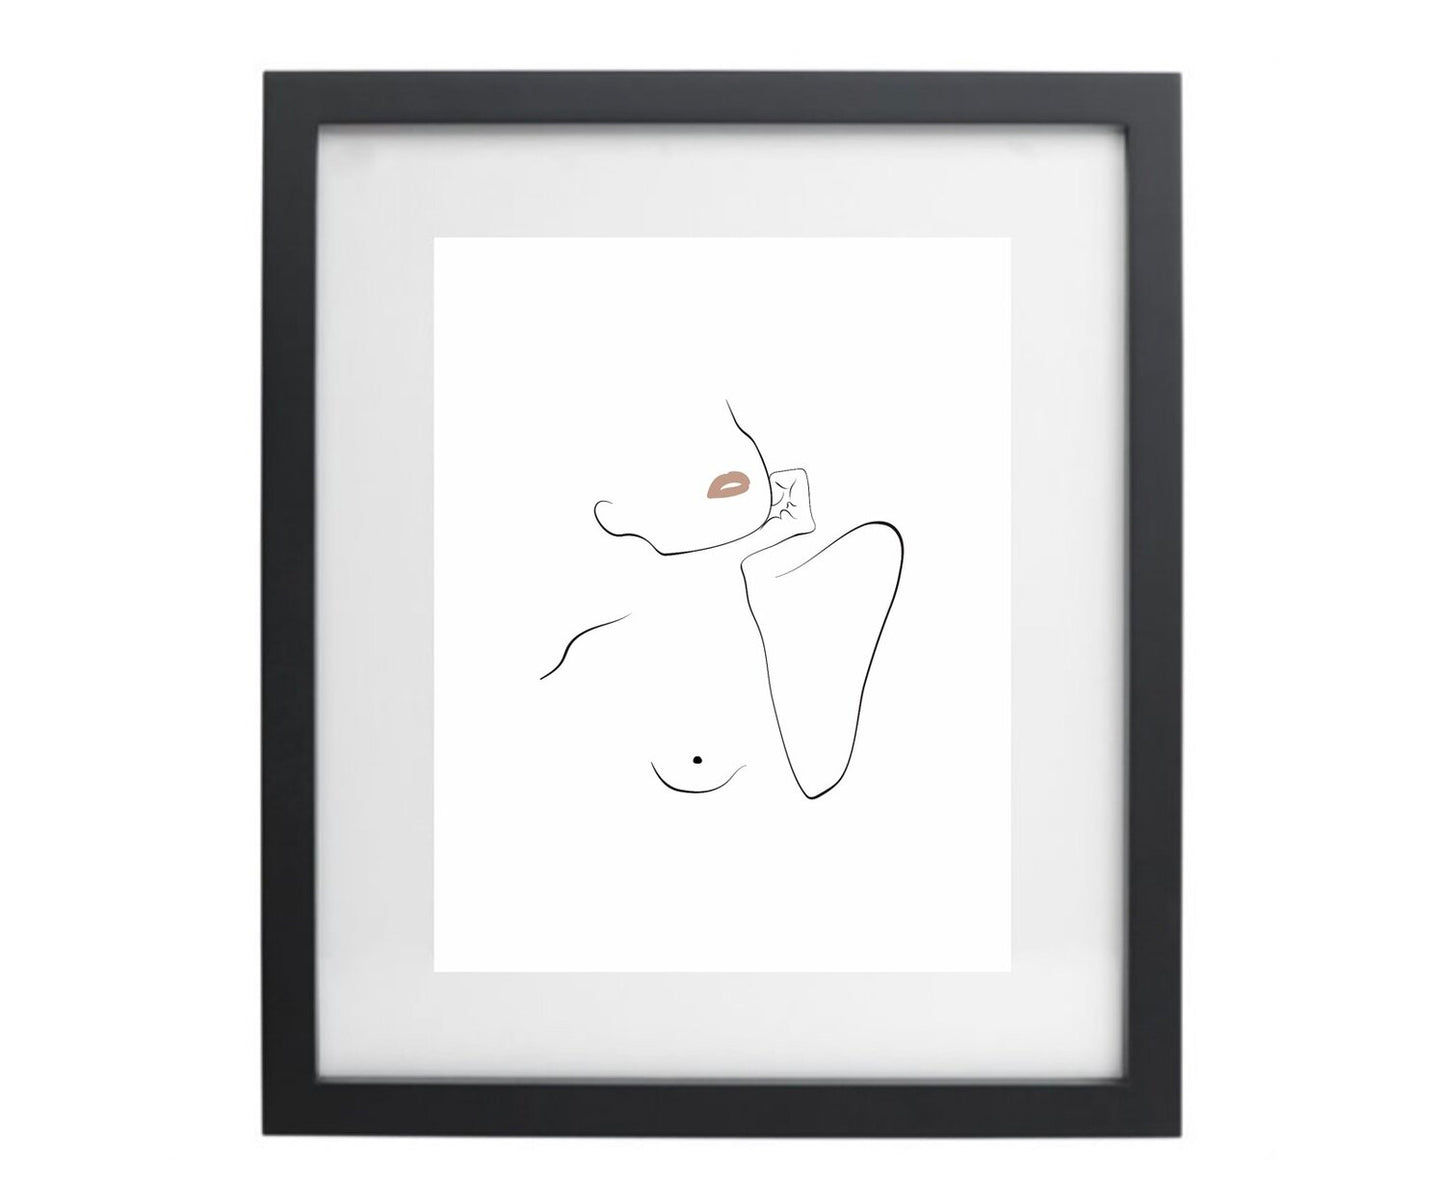 Minimalist female figure line artwork in a black frame